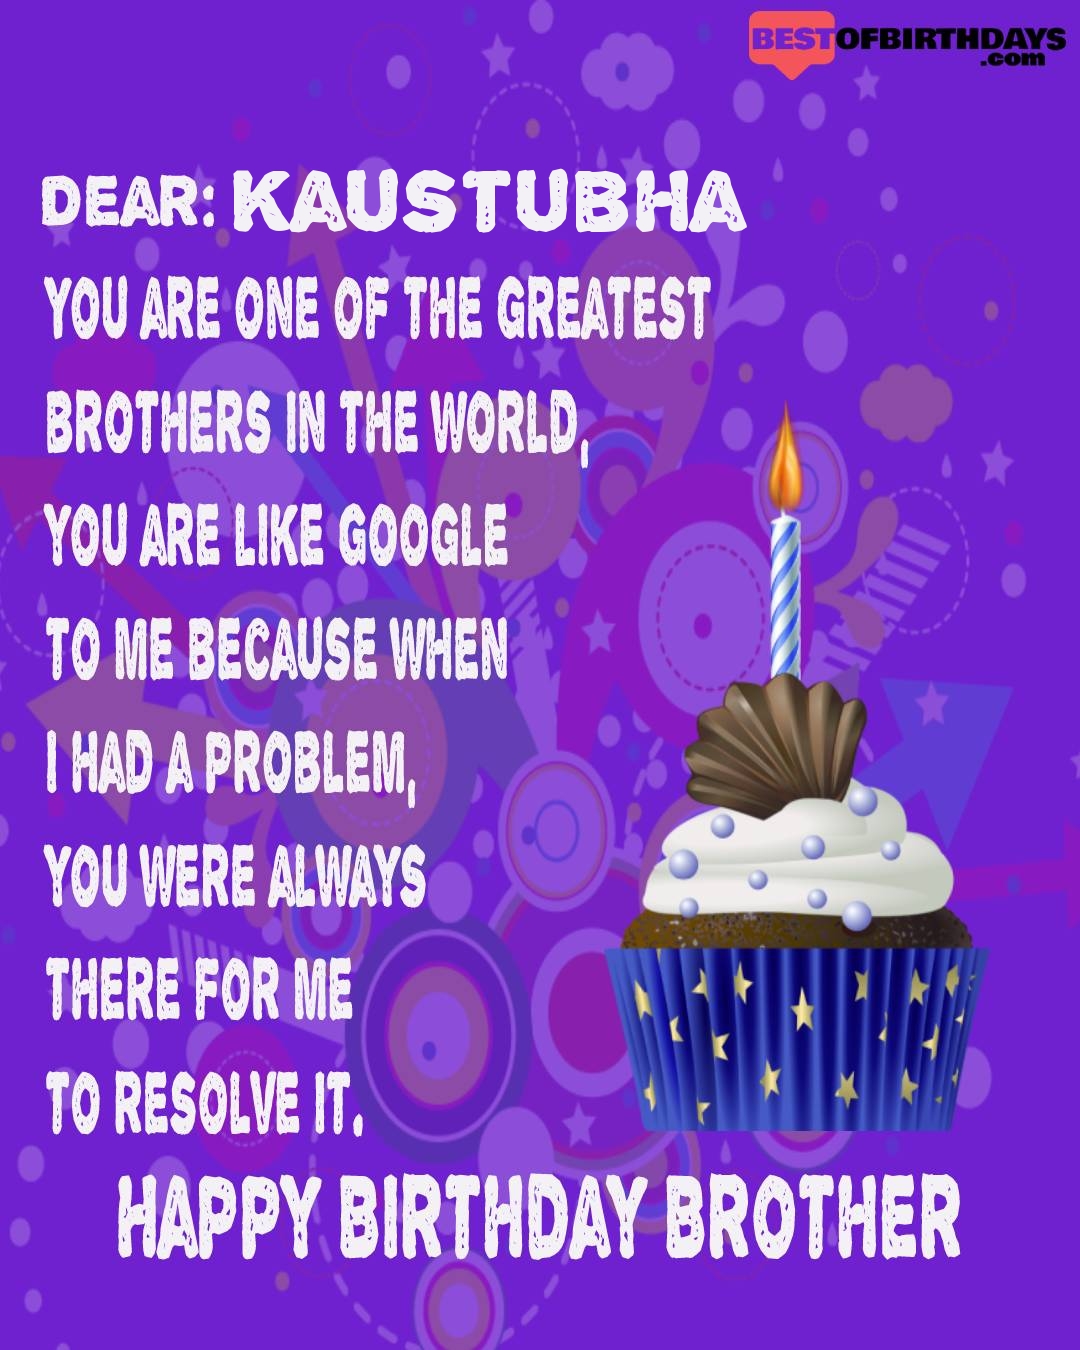 Happy birthday kaustubha bhai brother bro